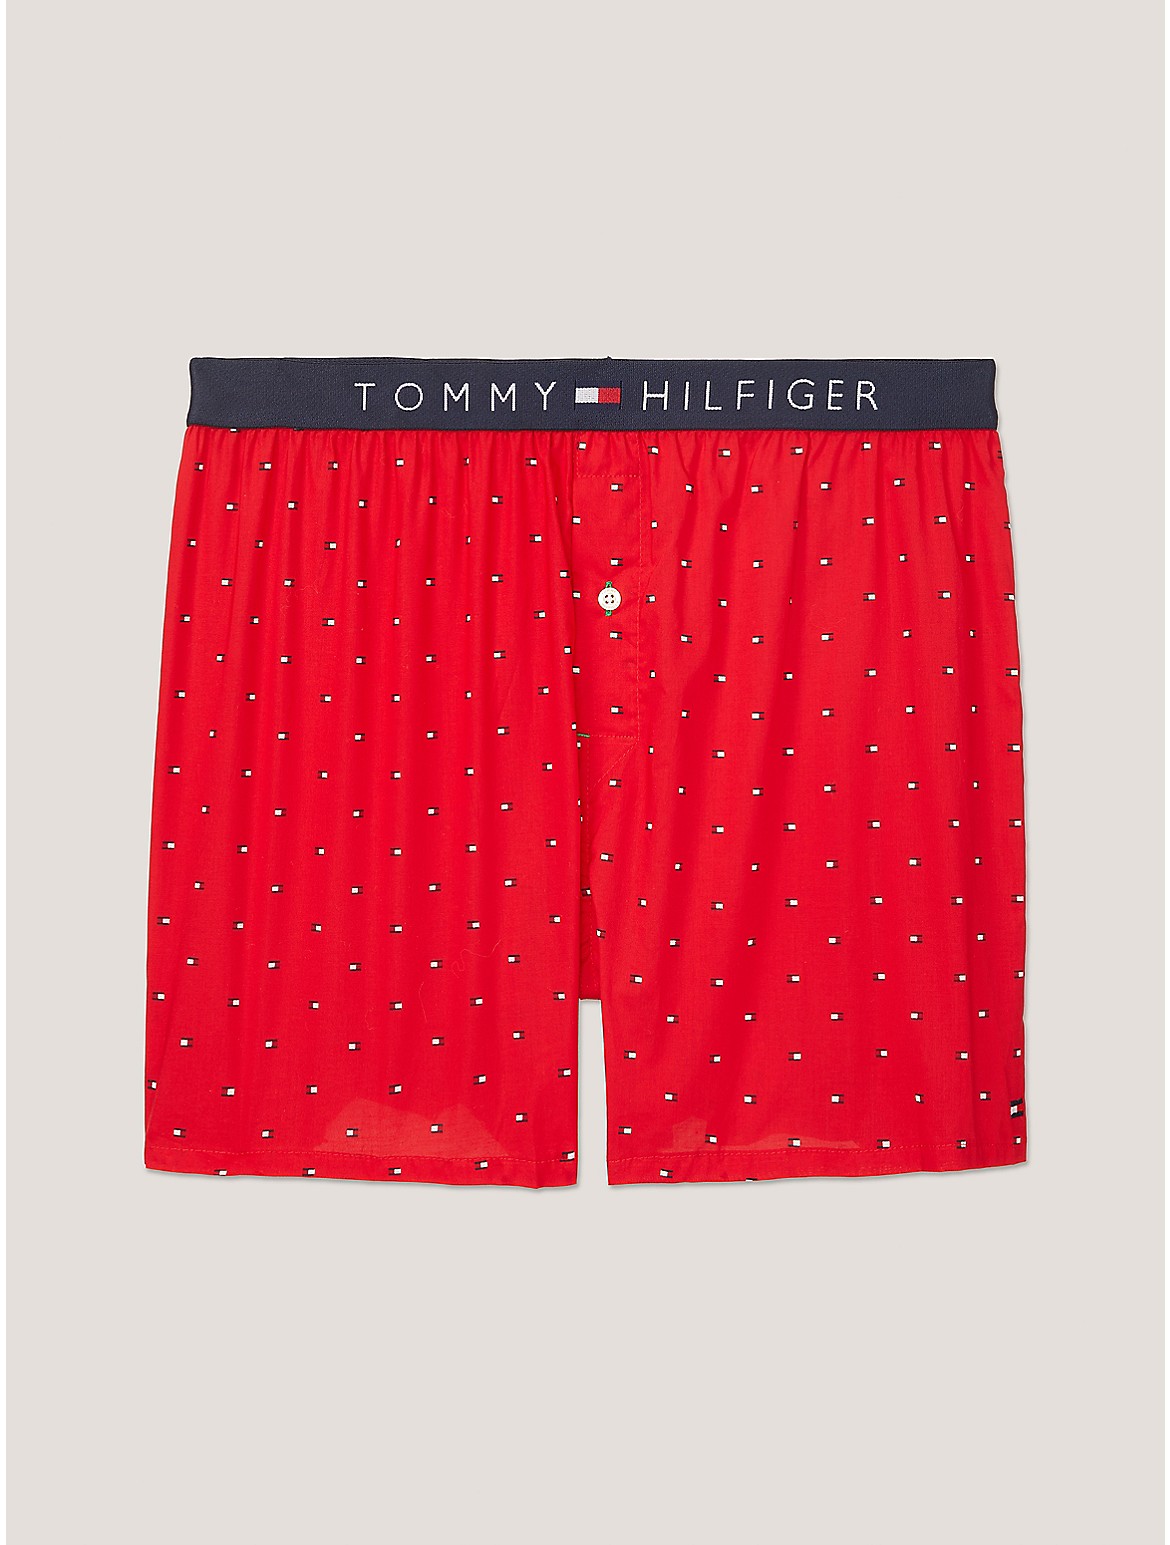 Tommy Hilfiger Men's Fashion Woven Boxer